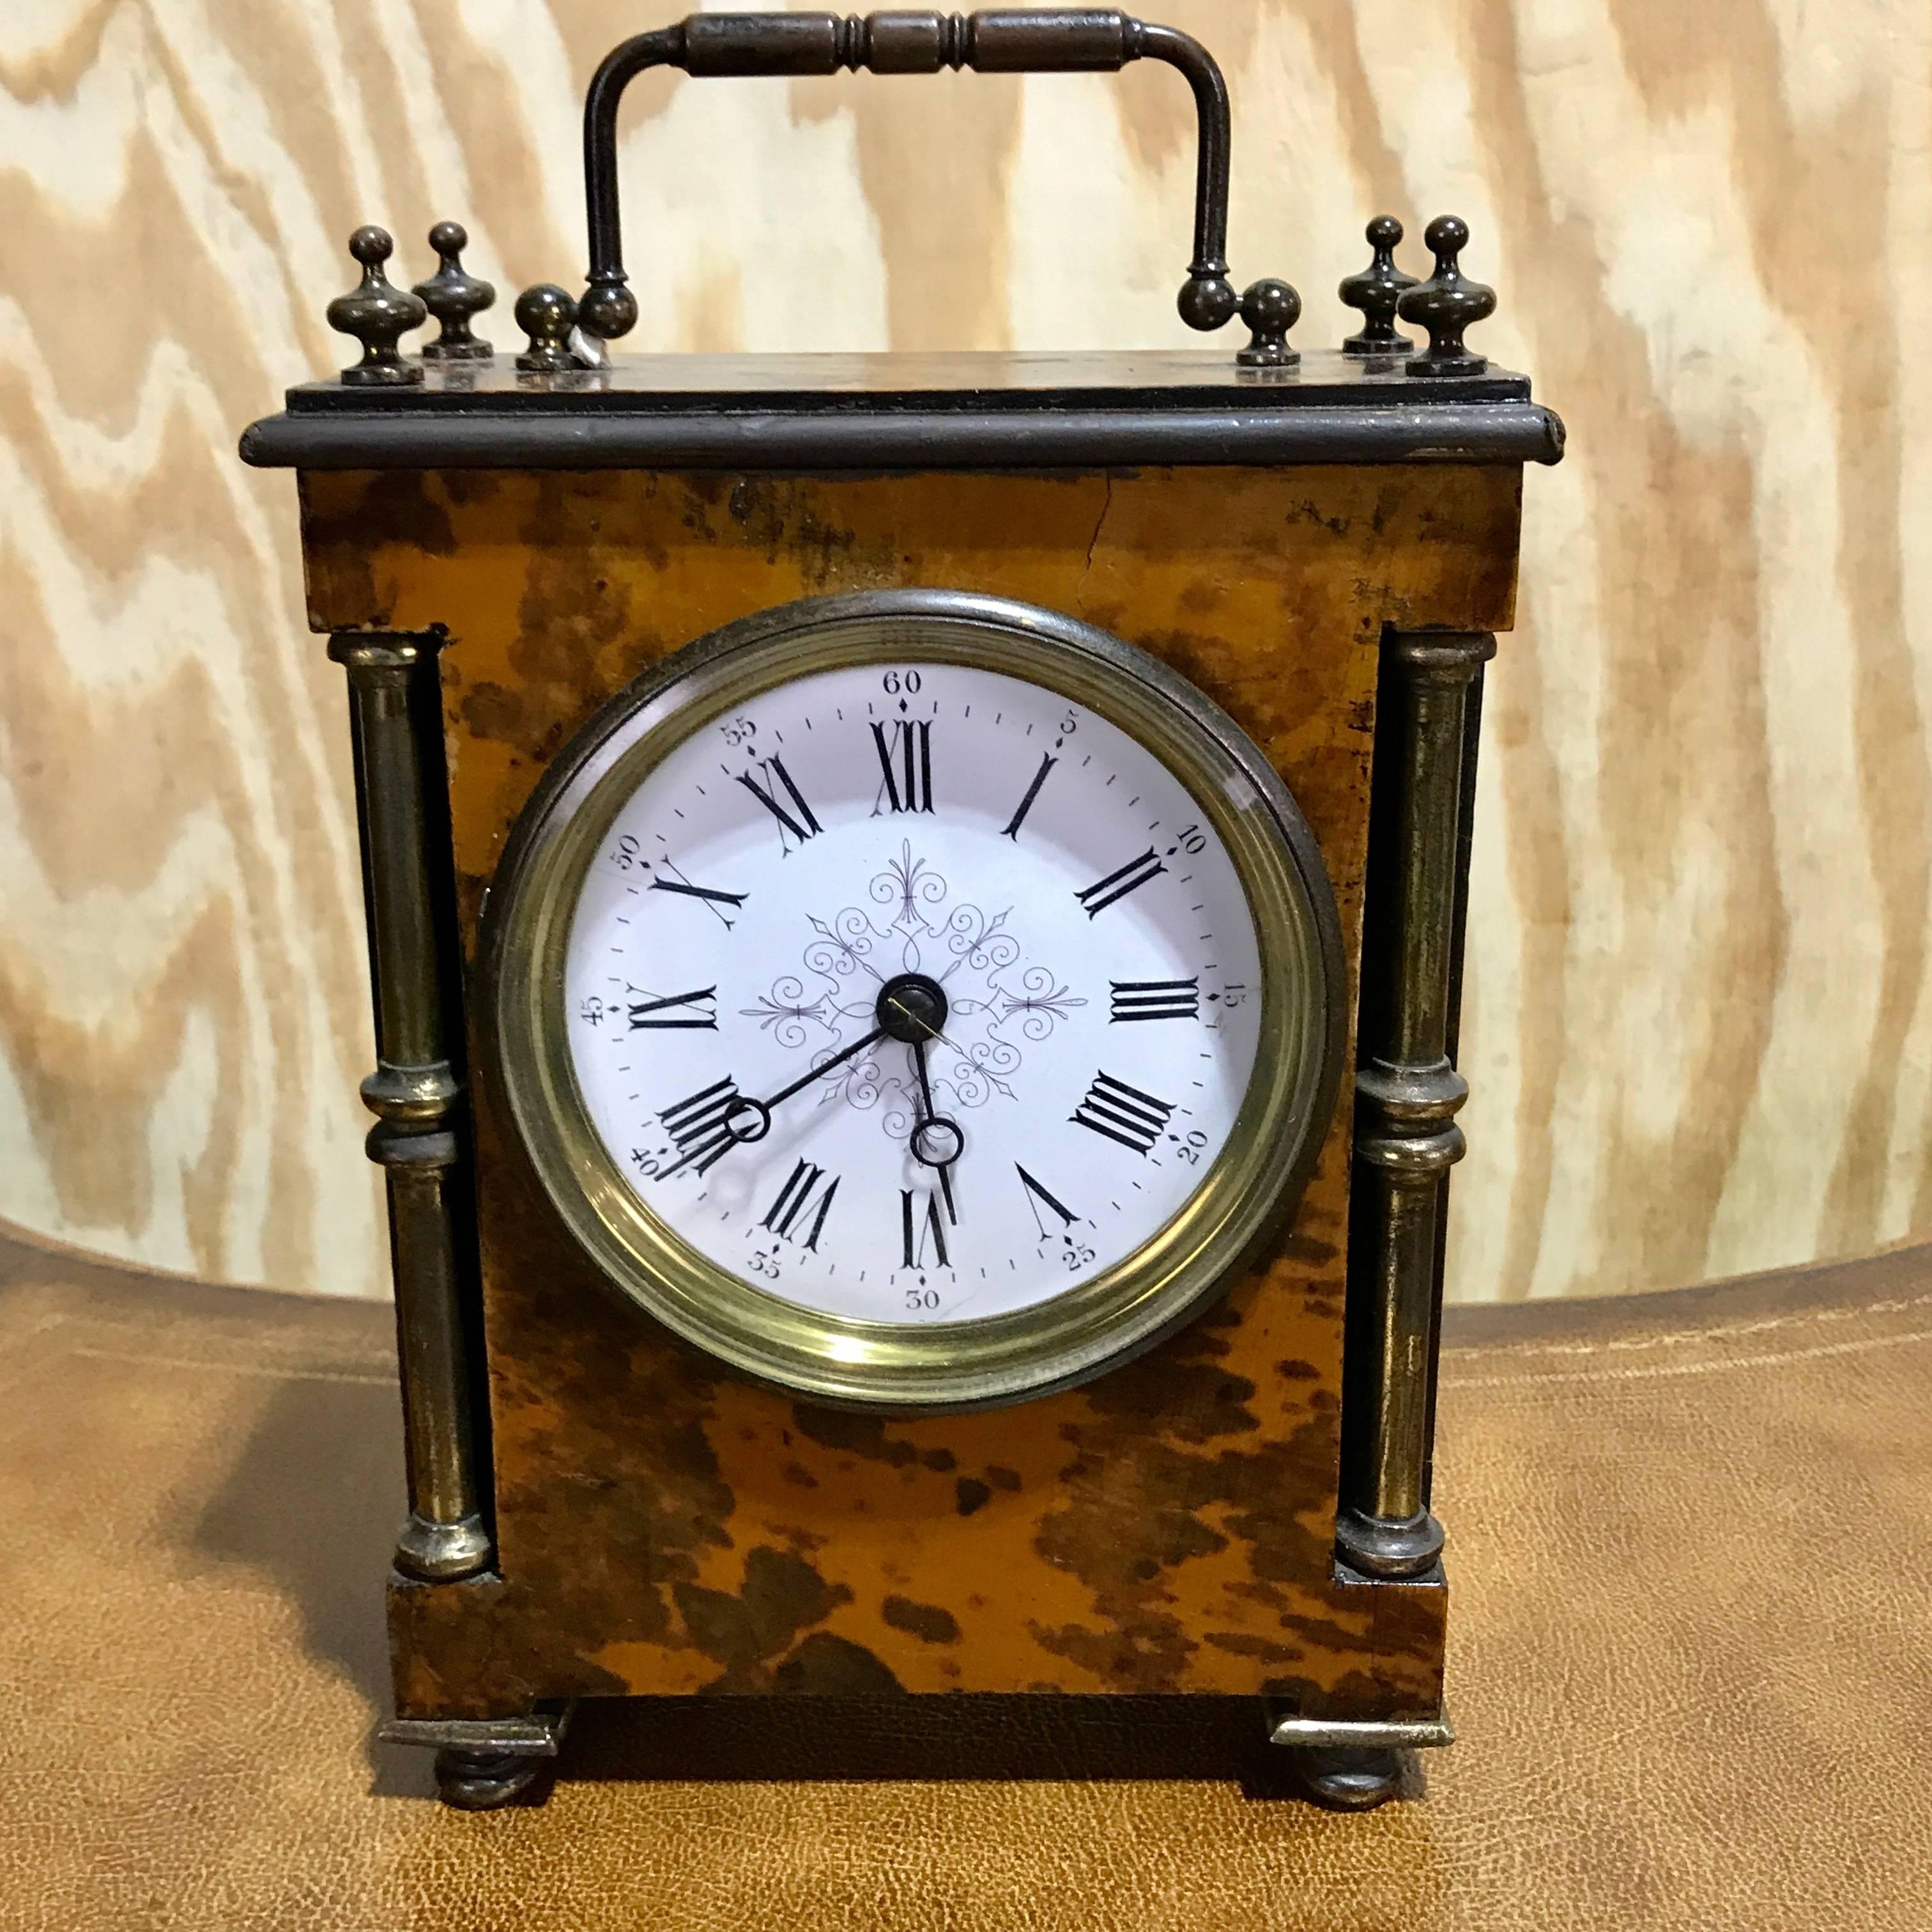 Antique English tortoiseshell bracket clock, keeps good time, complete with key.